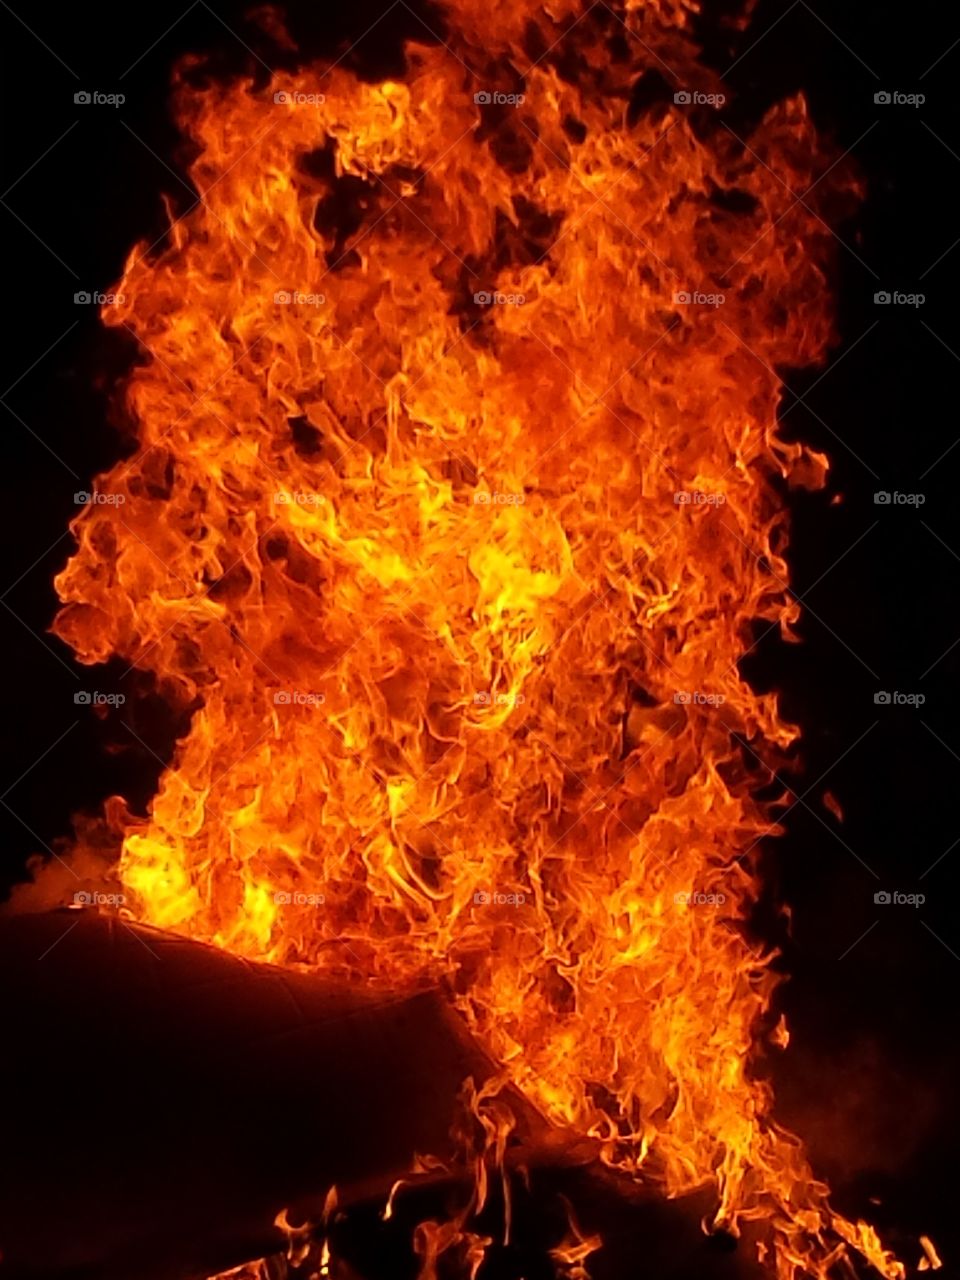 Fire. burning the dog house